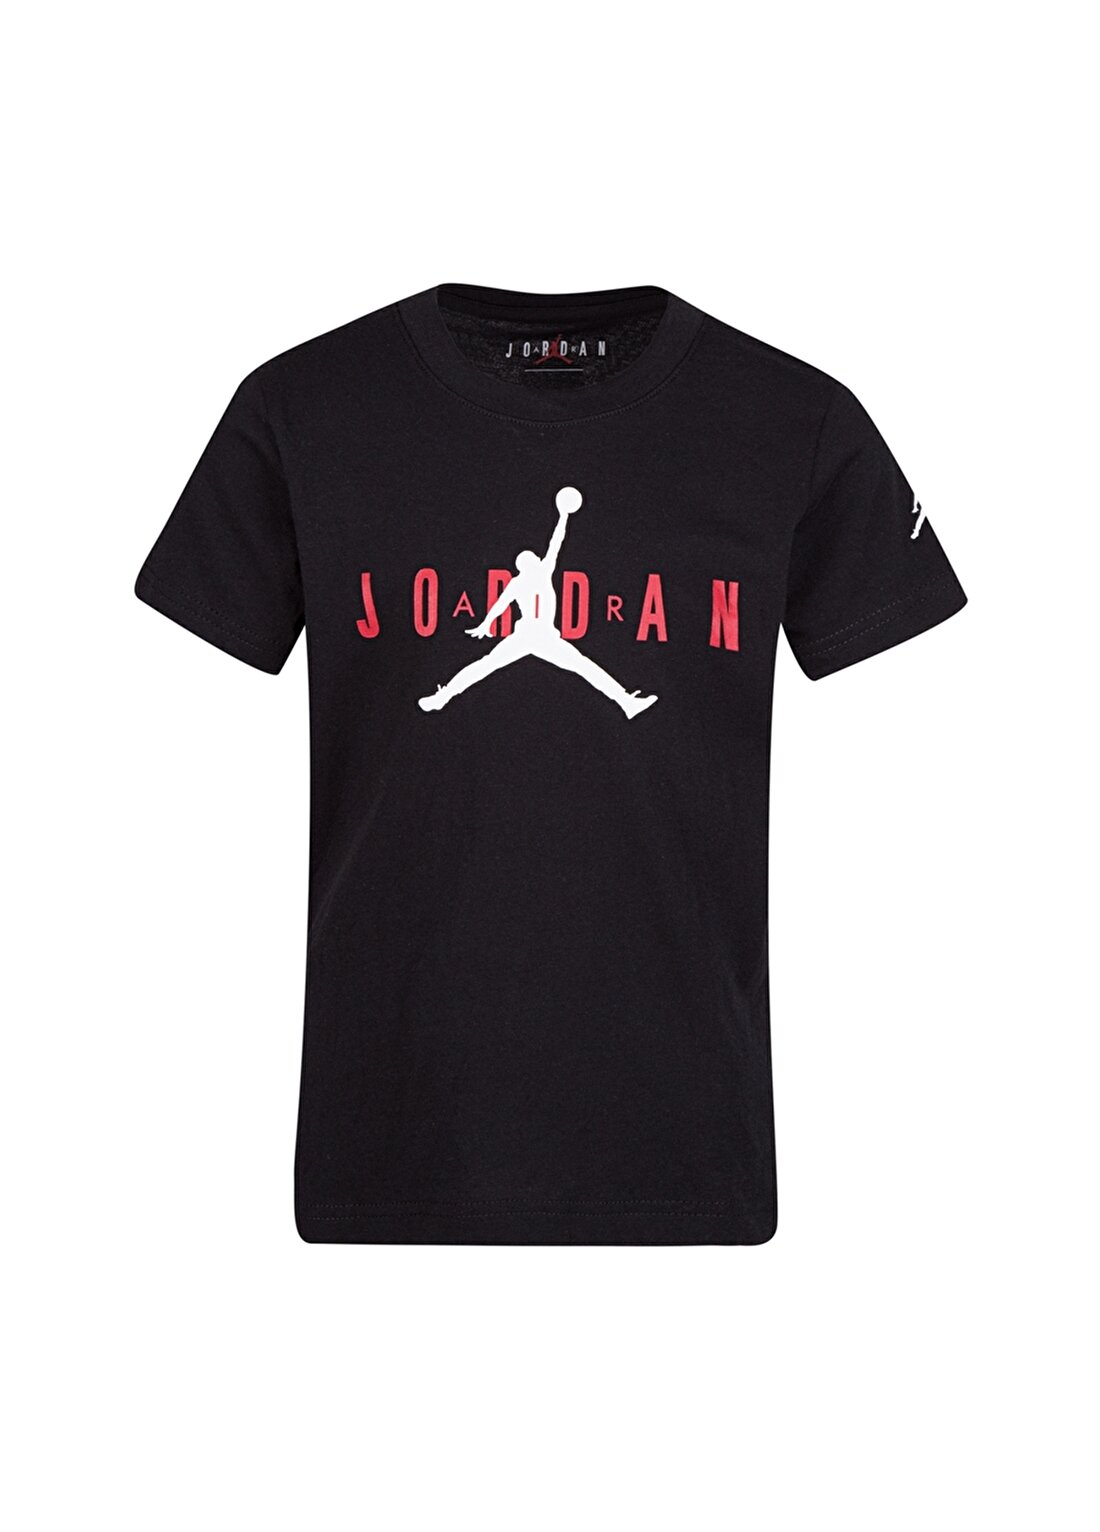 Nike 855175-023 JDB Brand Tee 5 Air Jordan Bisiklet Yaka Brand Tee Siyah Erkek T-Shirt